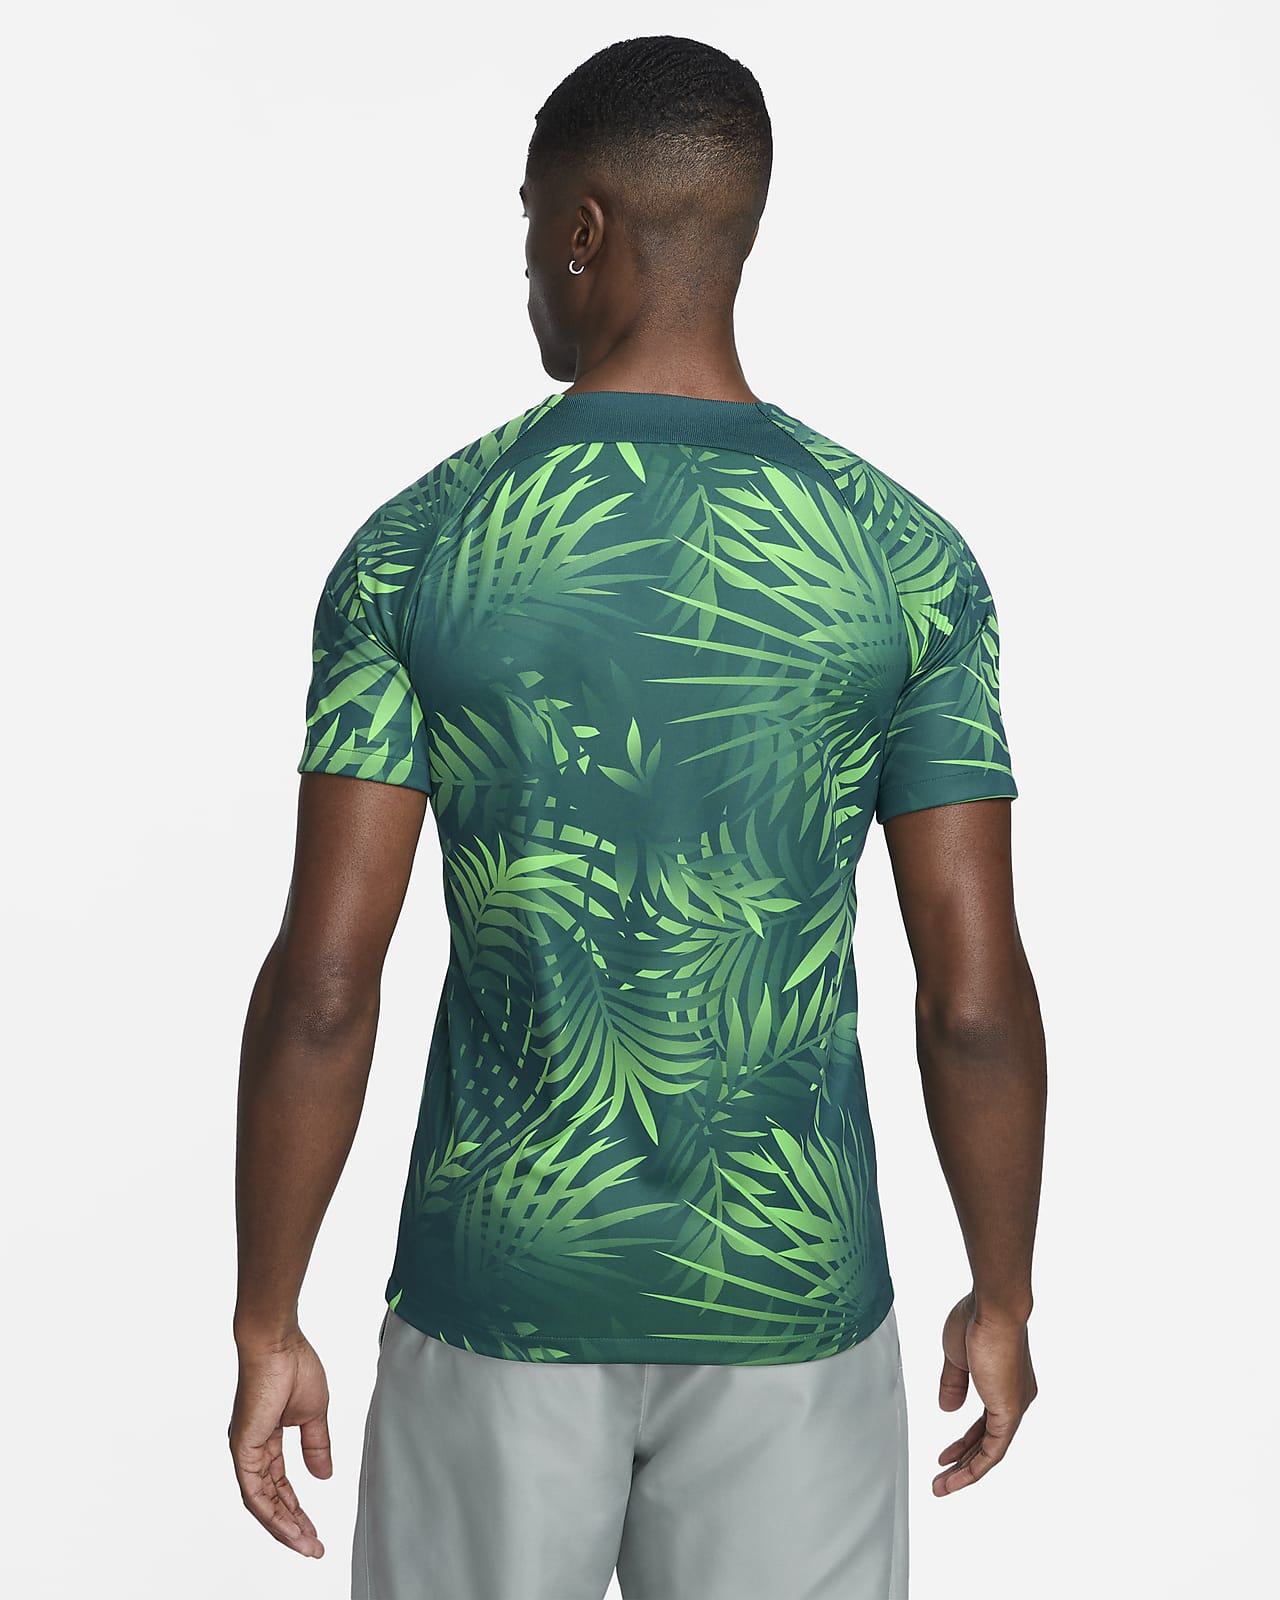 Brazil Training Shirt - Extra Large - Very Good Condition - Nike